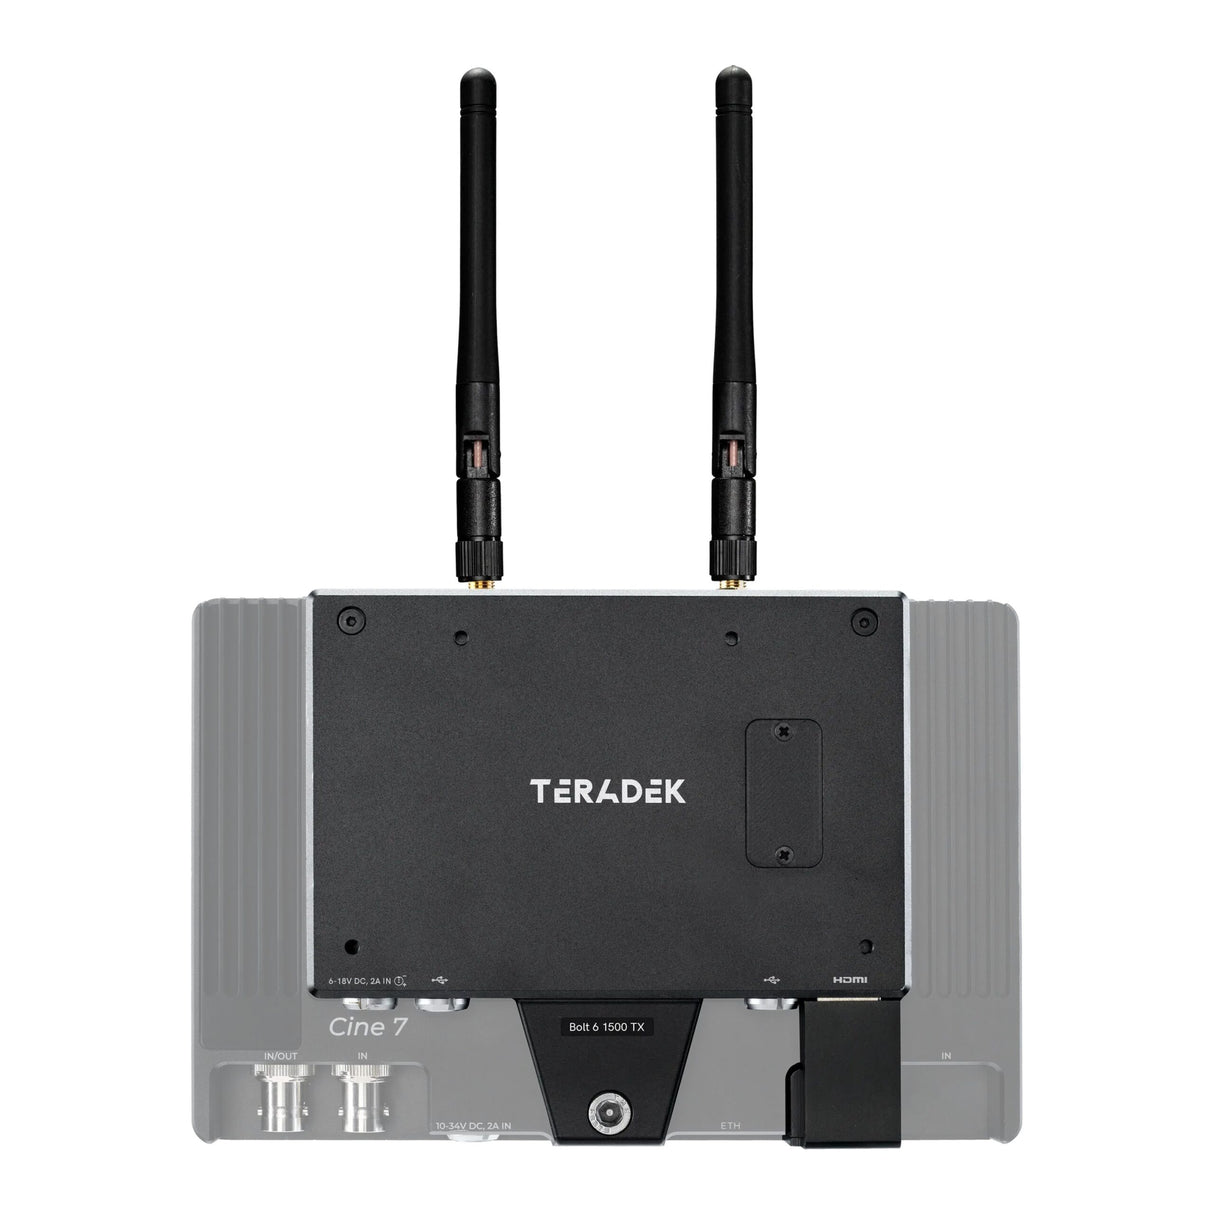 Teradek 10-2298-7 Bolt 6 Monitor Module 1500 Wireless Video Transmitter